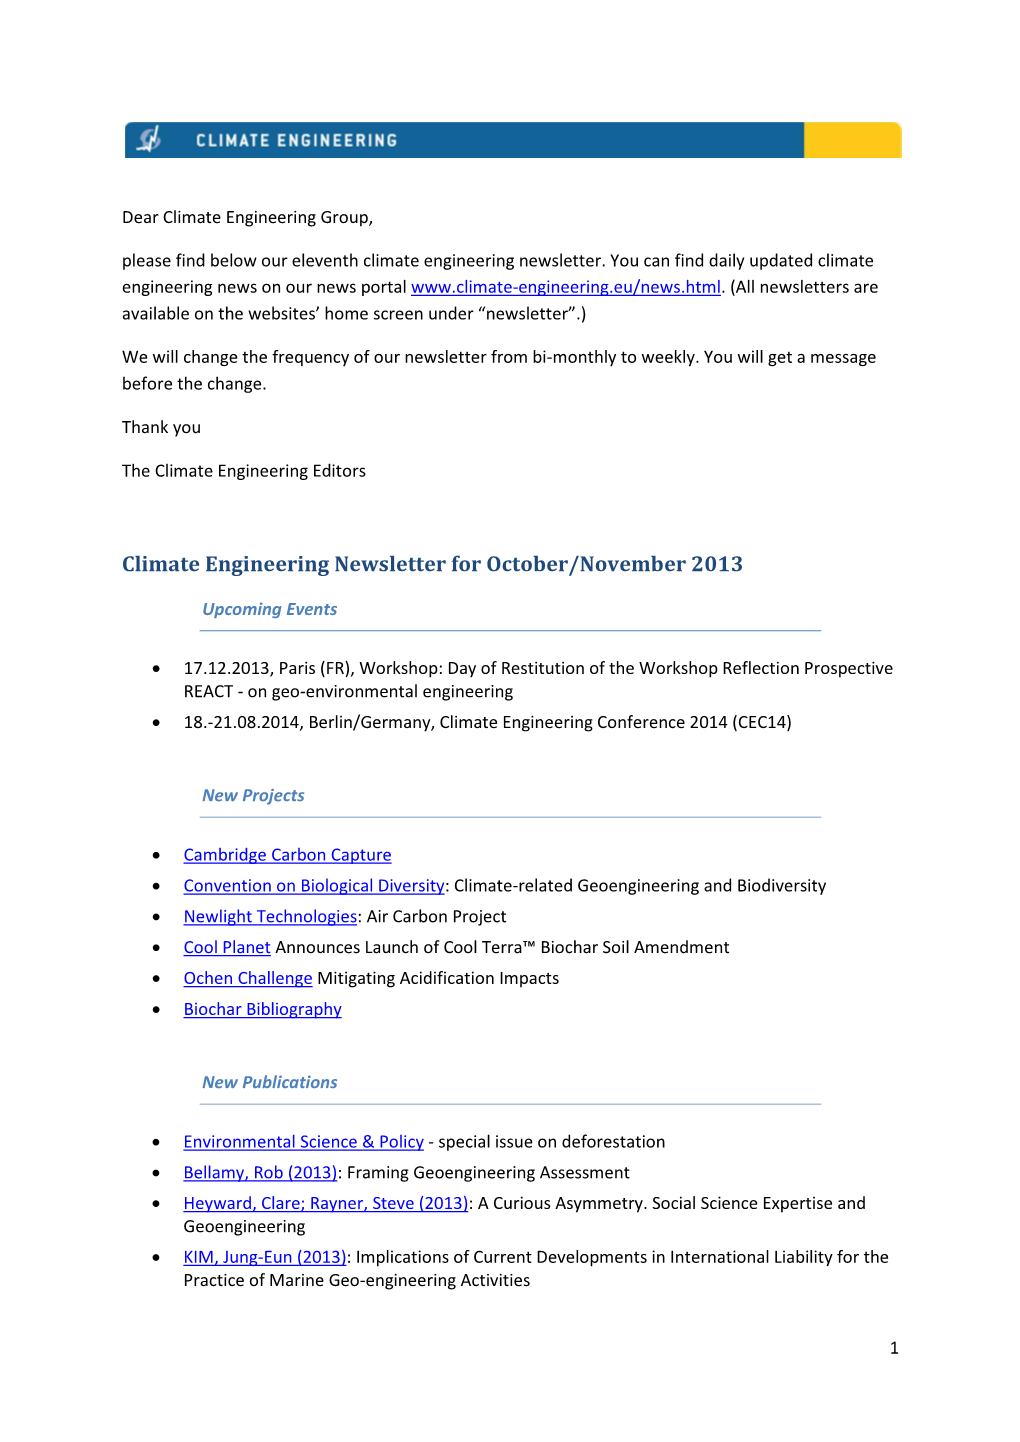 Climate Engineering Newsletter for October/November 2013